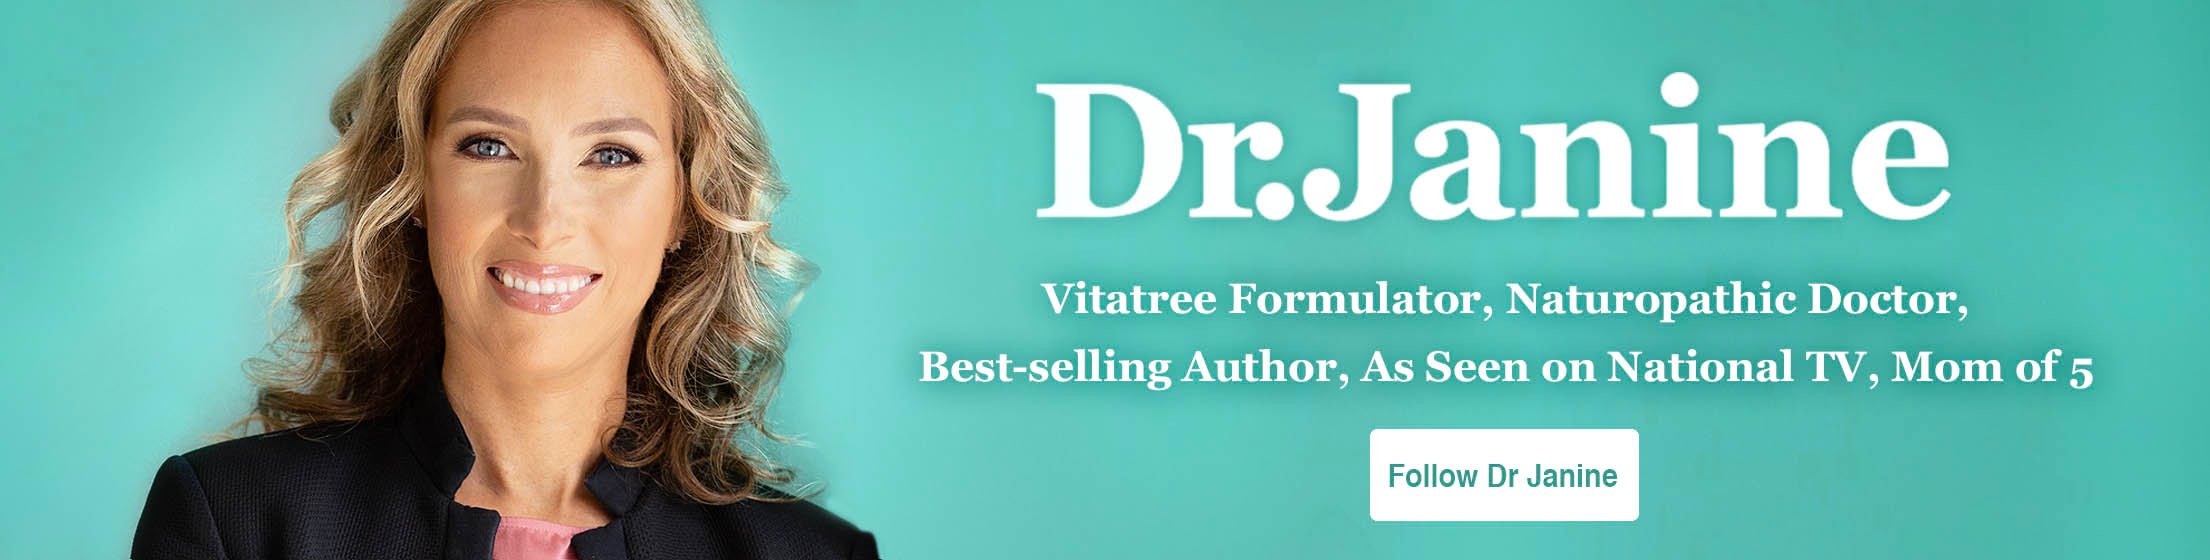 vitatree homepage banner dr janine bowring